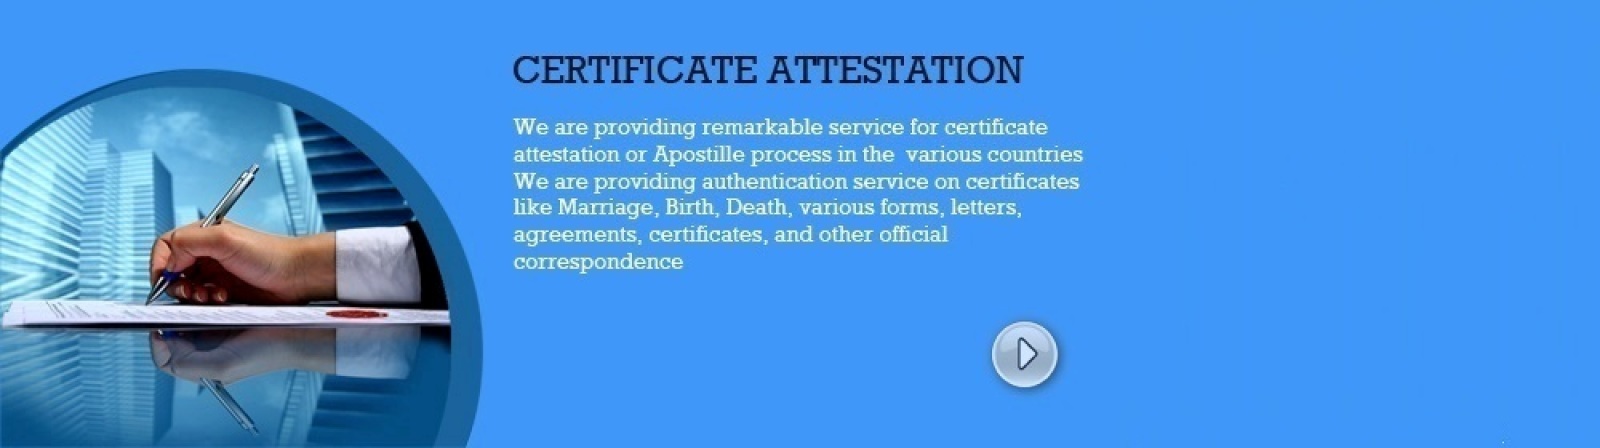 Certificate-Attestation.html